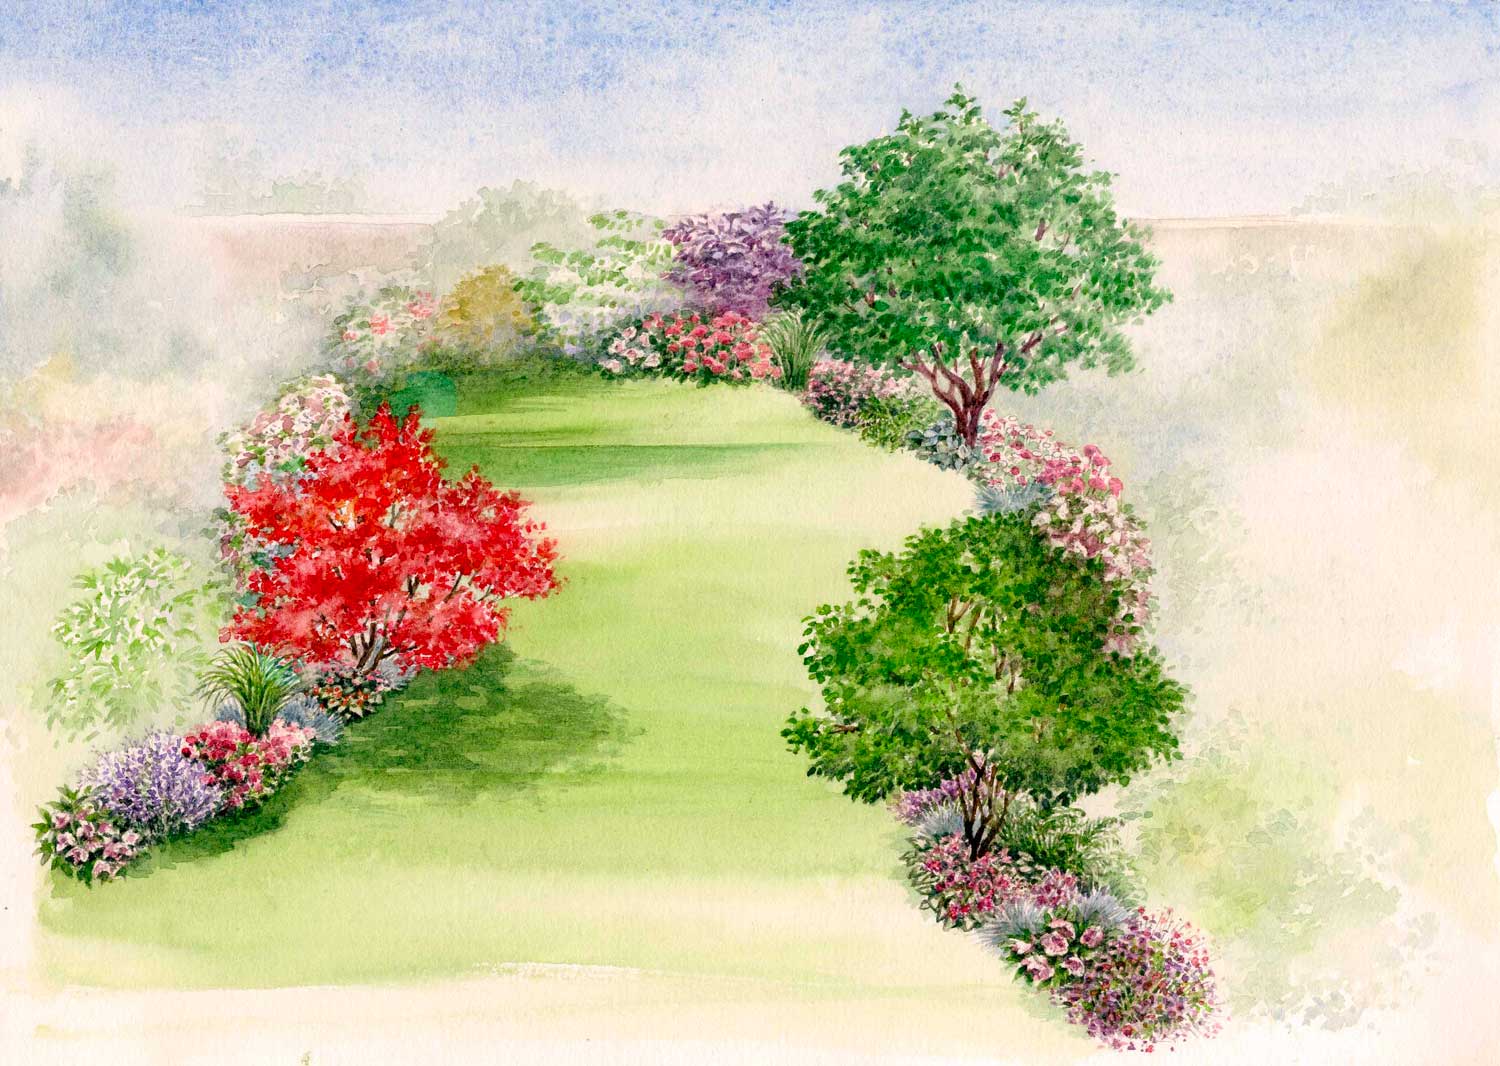 Watercolour of a Free garden by Noelle Le Guillouzic